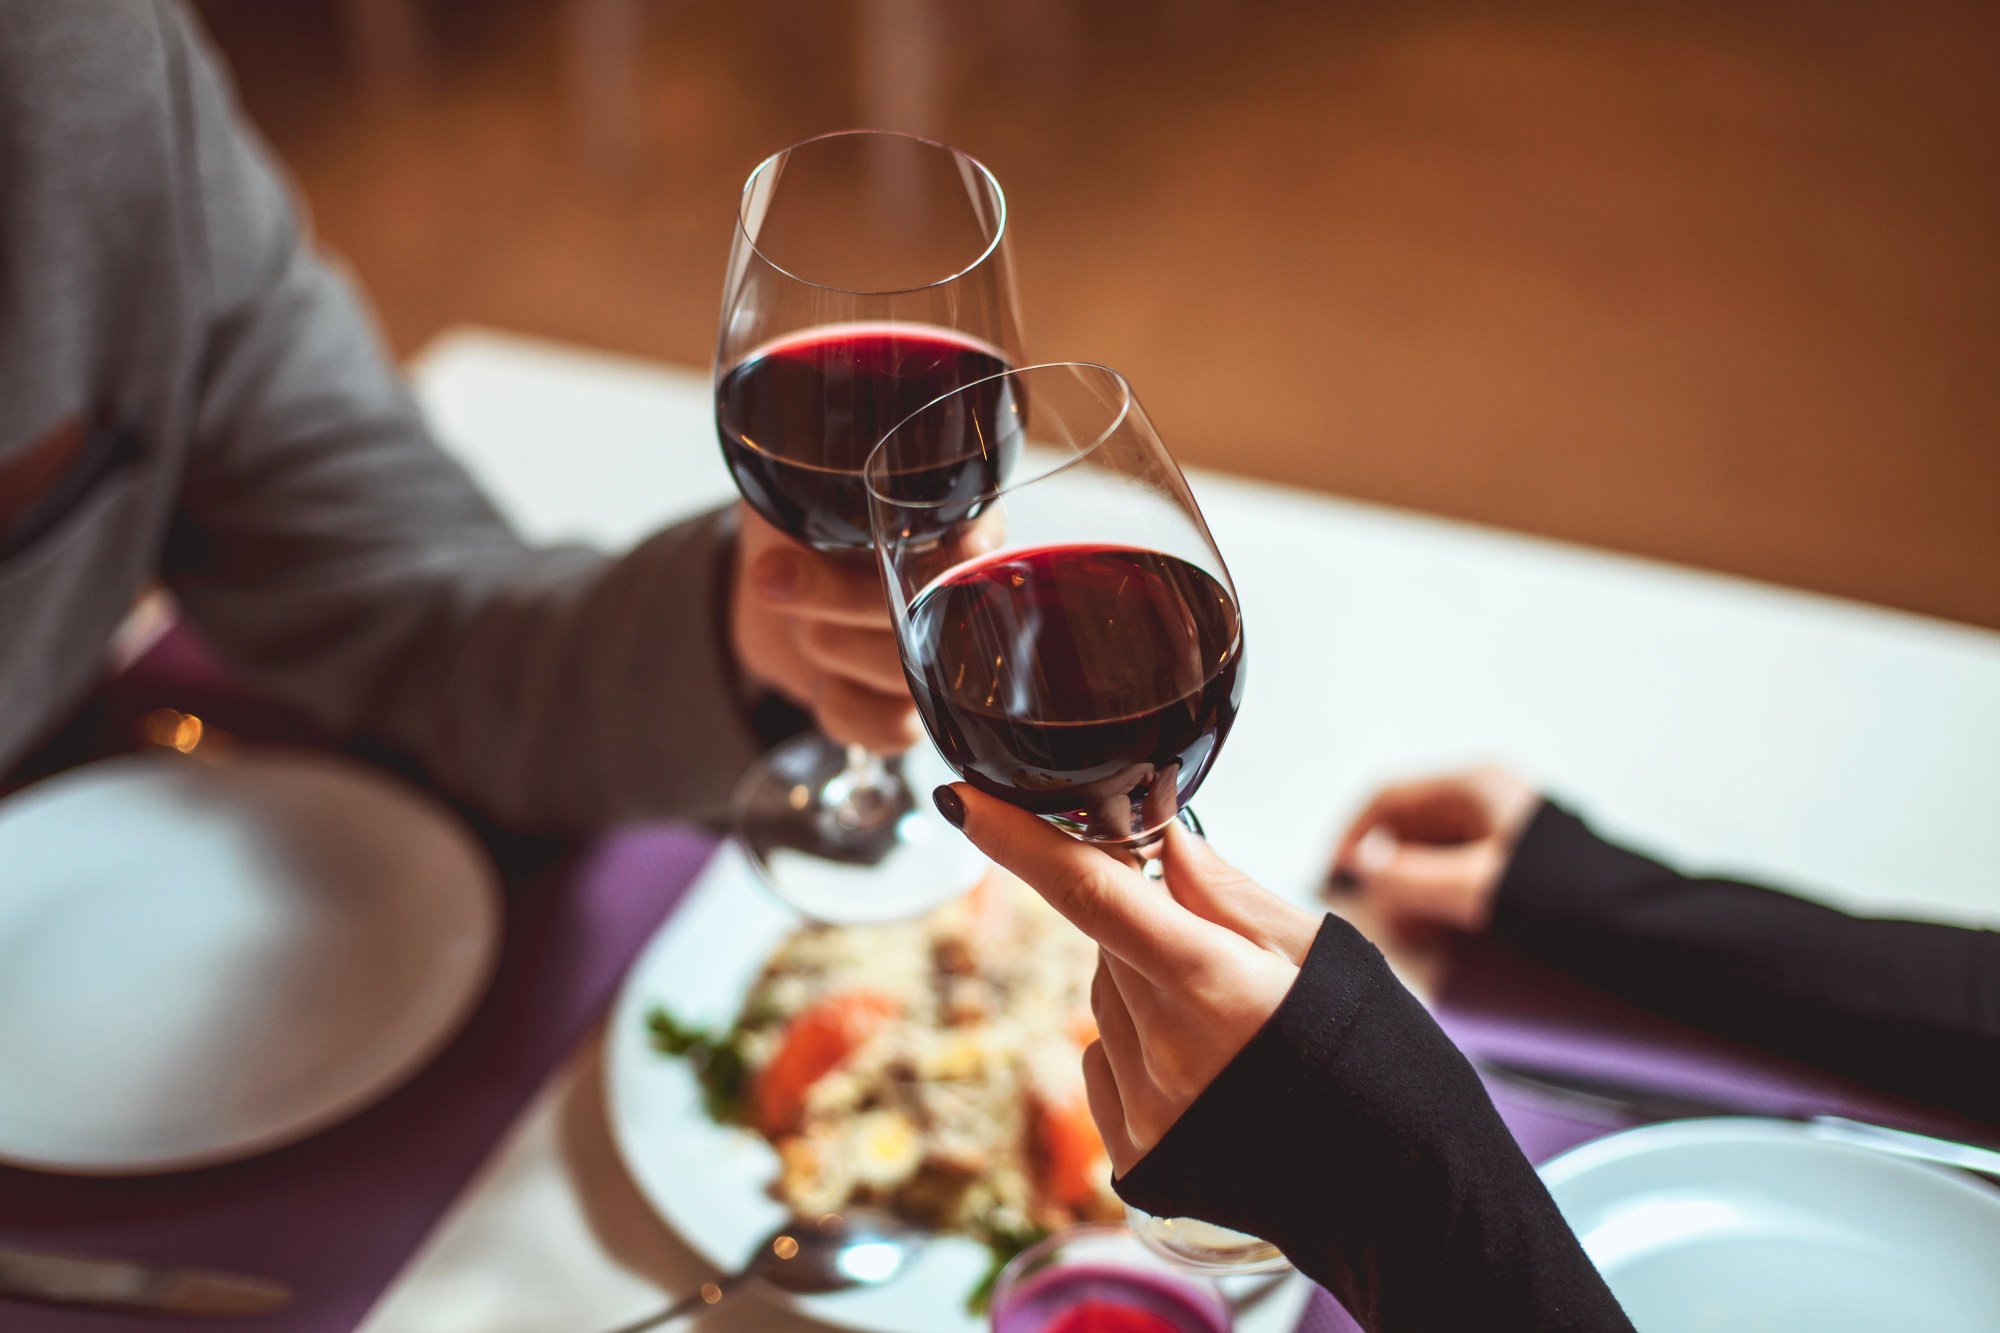 Картинка пить вино. Бокал вина. Бокал вина на столе в ресторане. Бокал красного вина. Романтический ужин в ресторане.